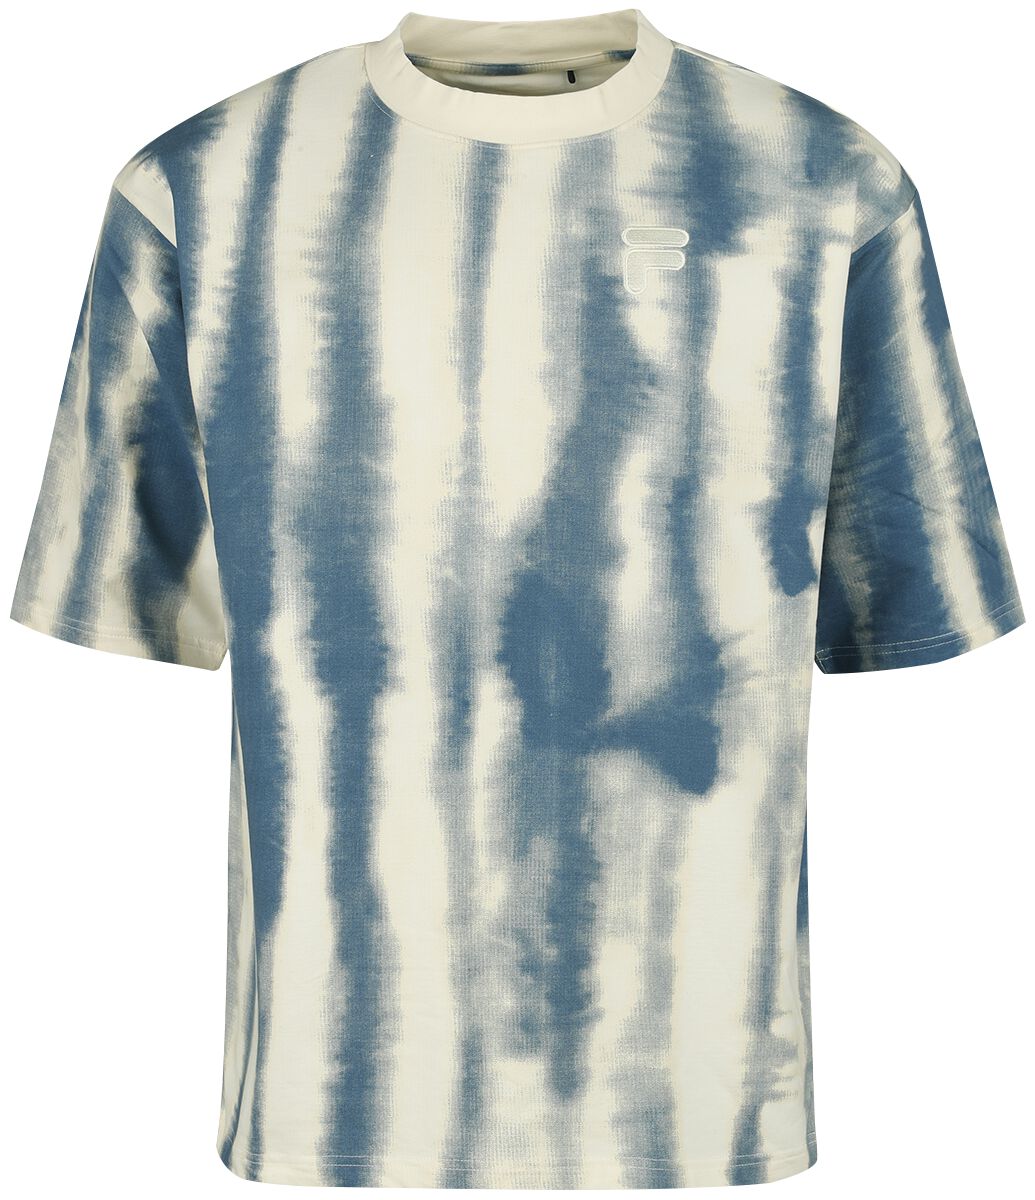 Fila CAPOLIVERI AOP oversized tee T-Shirt weiß blau in S